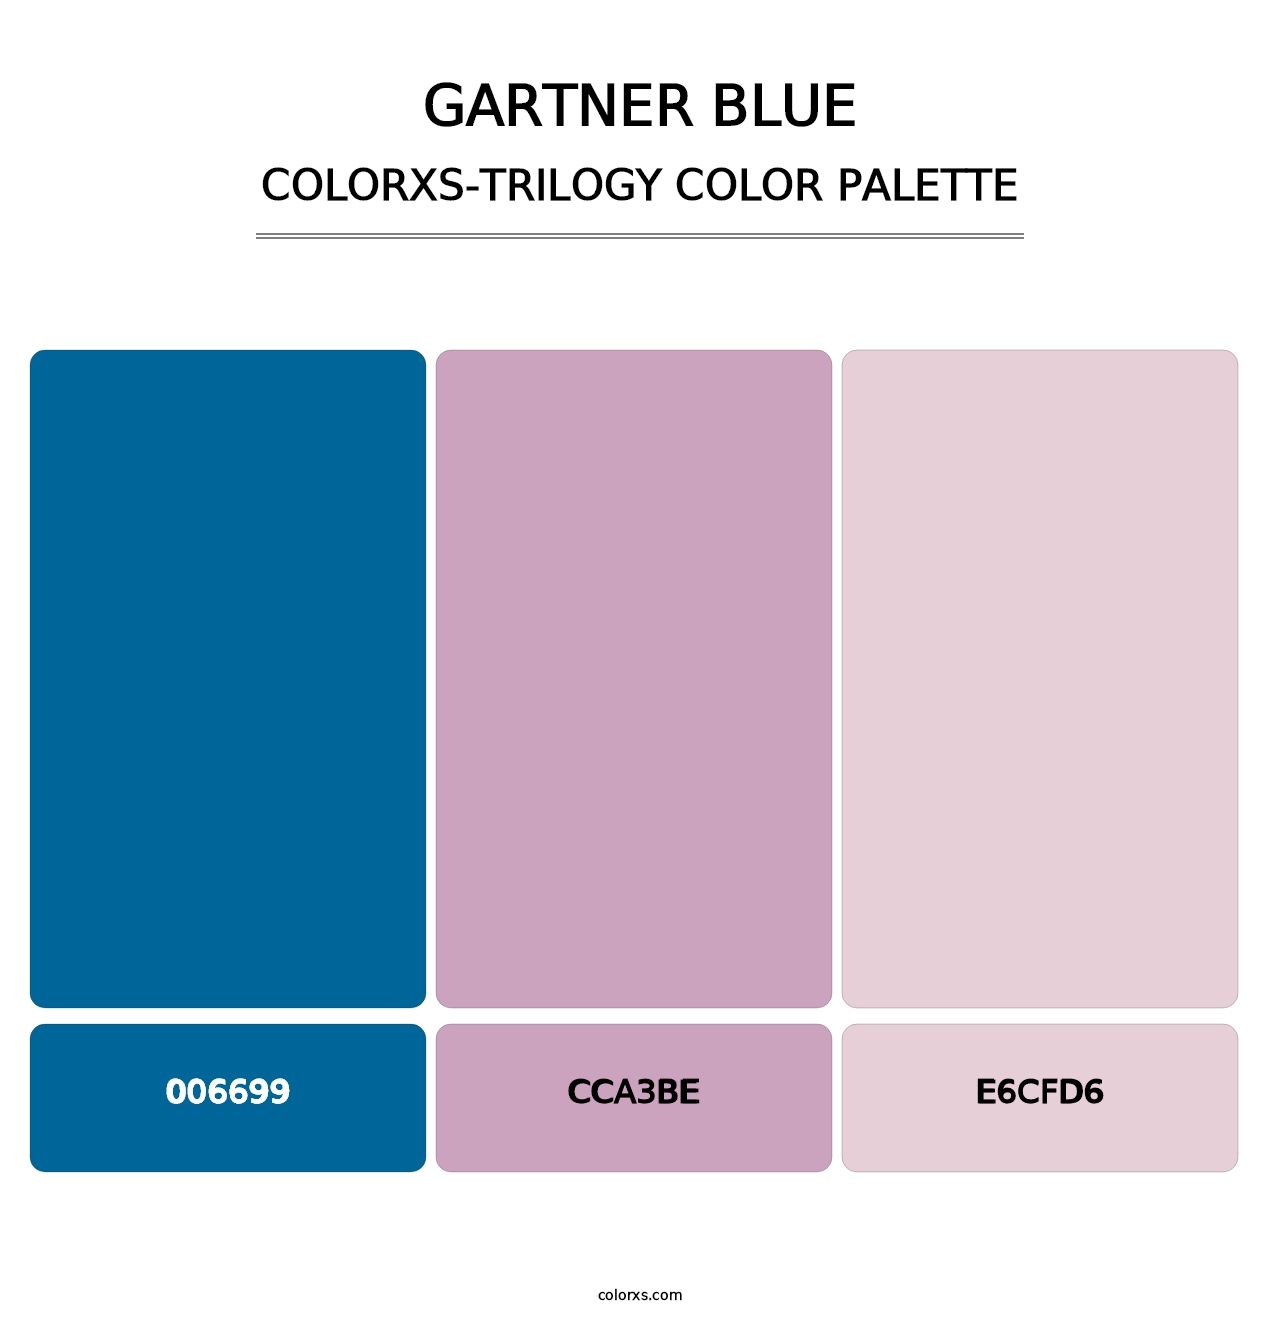 Gartner Blue - Colorxs Trilogy Palette